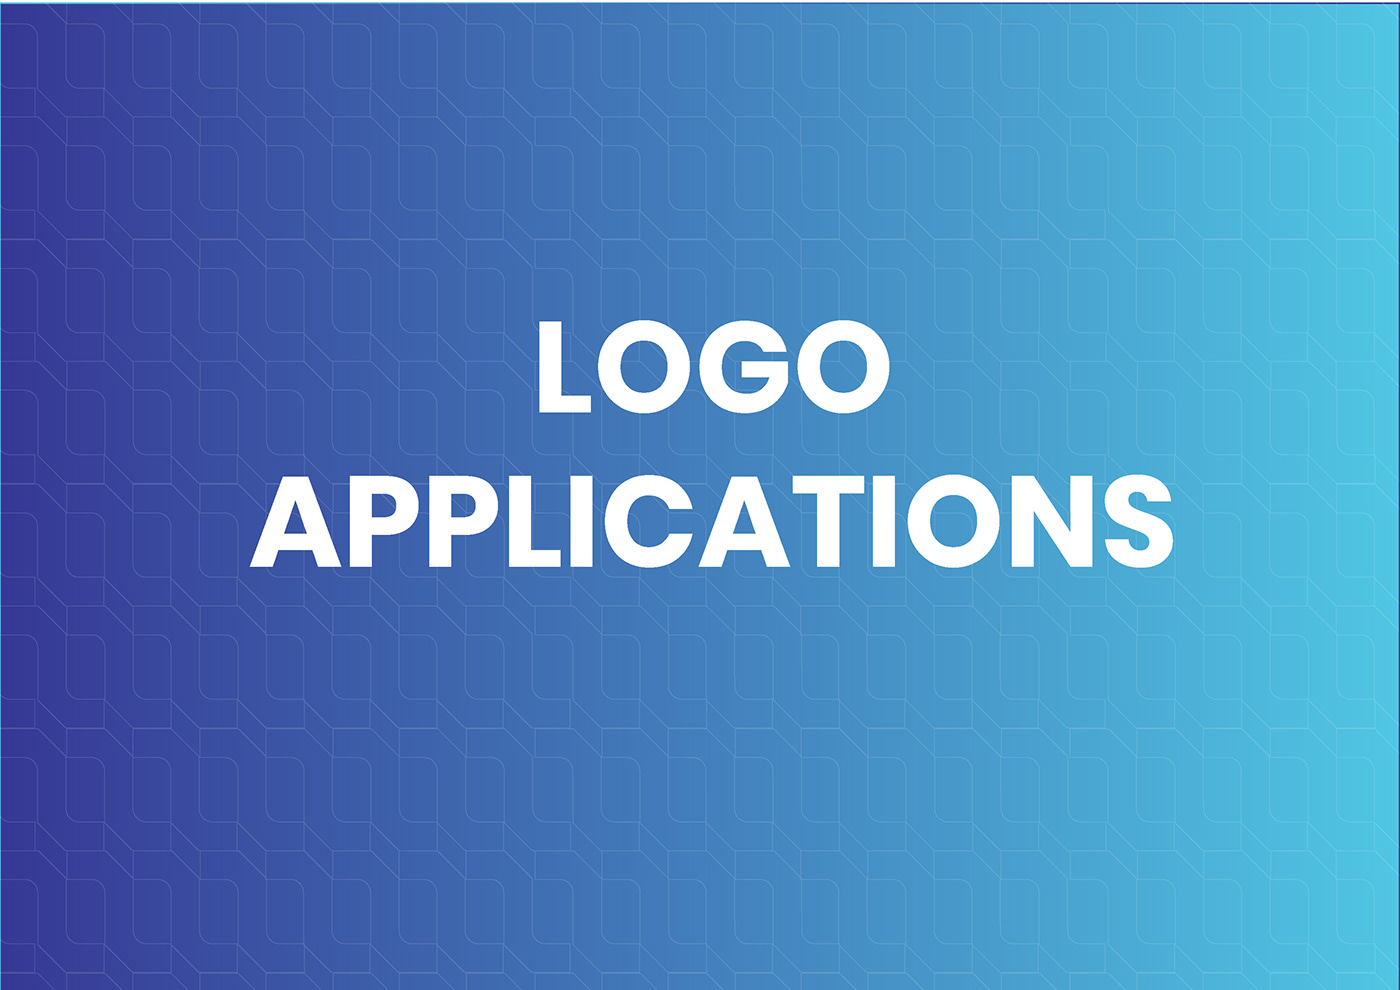 Brand Design brand guidelines brand identity Logo Design robot Technology tech logos Logotype visual identity